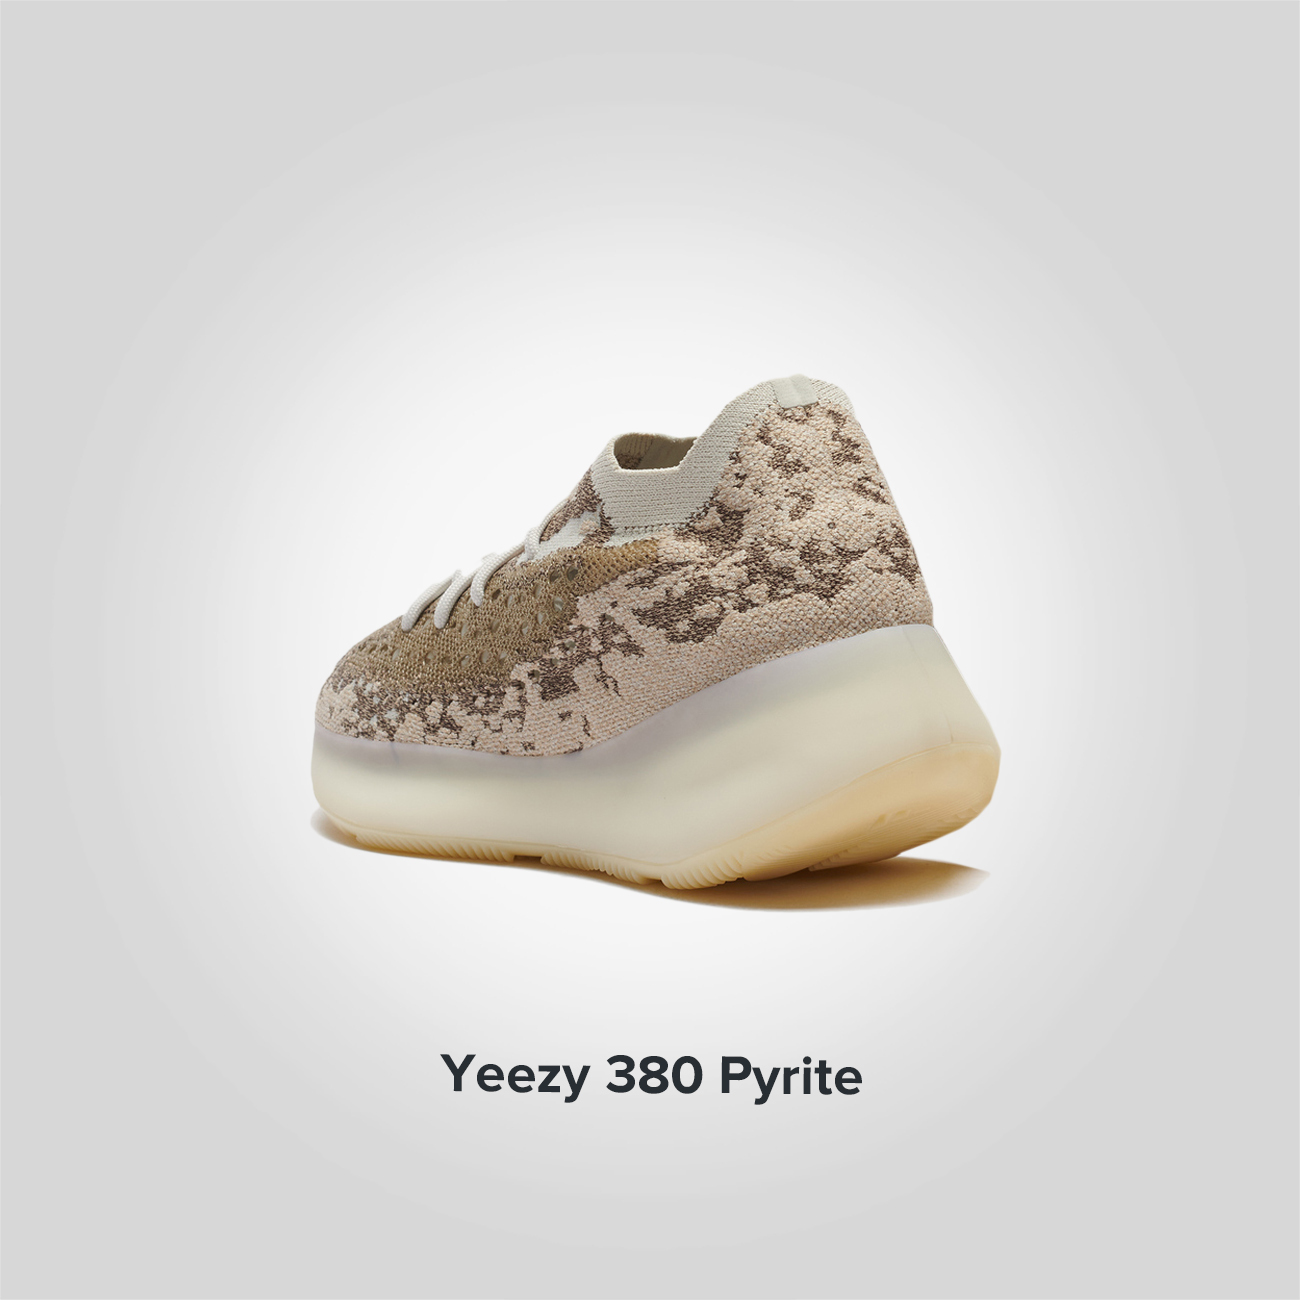 Yeezy 380 Pyrite